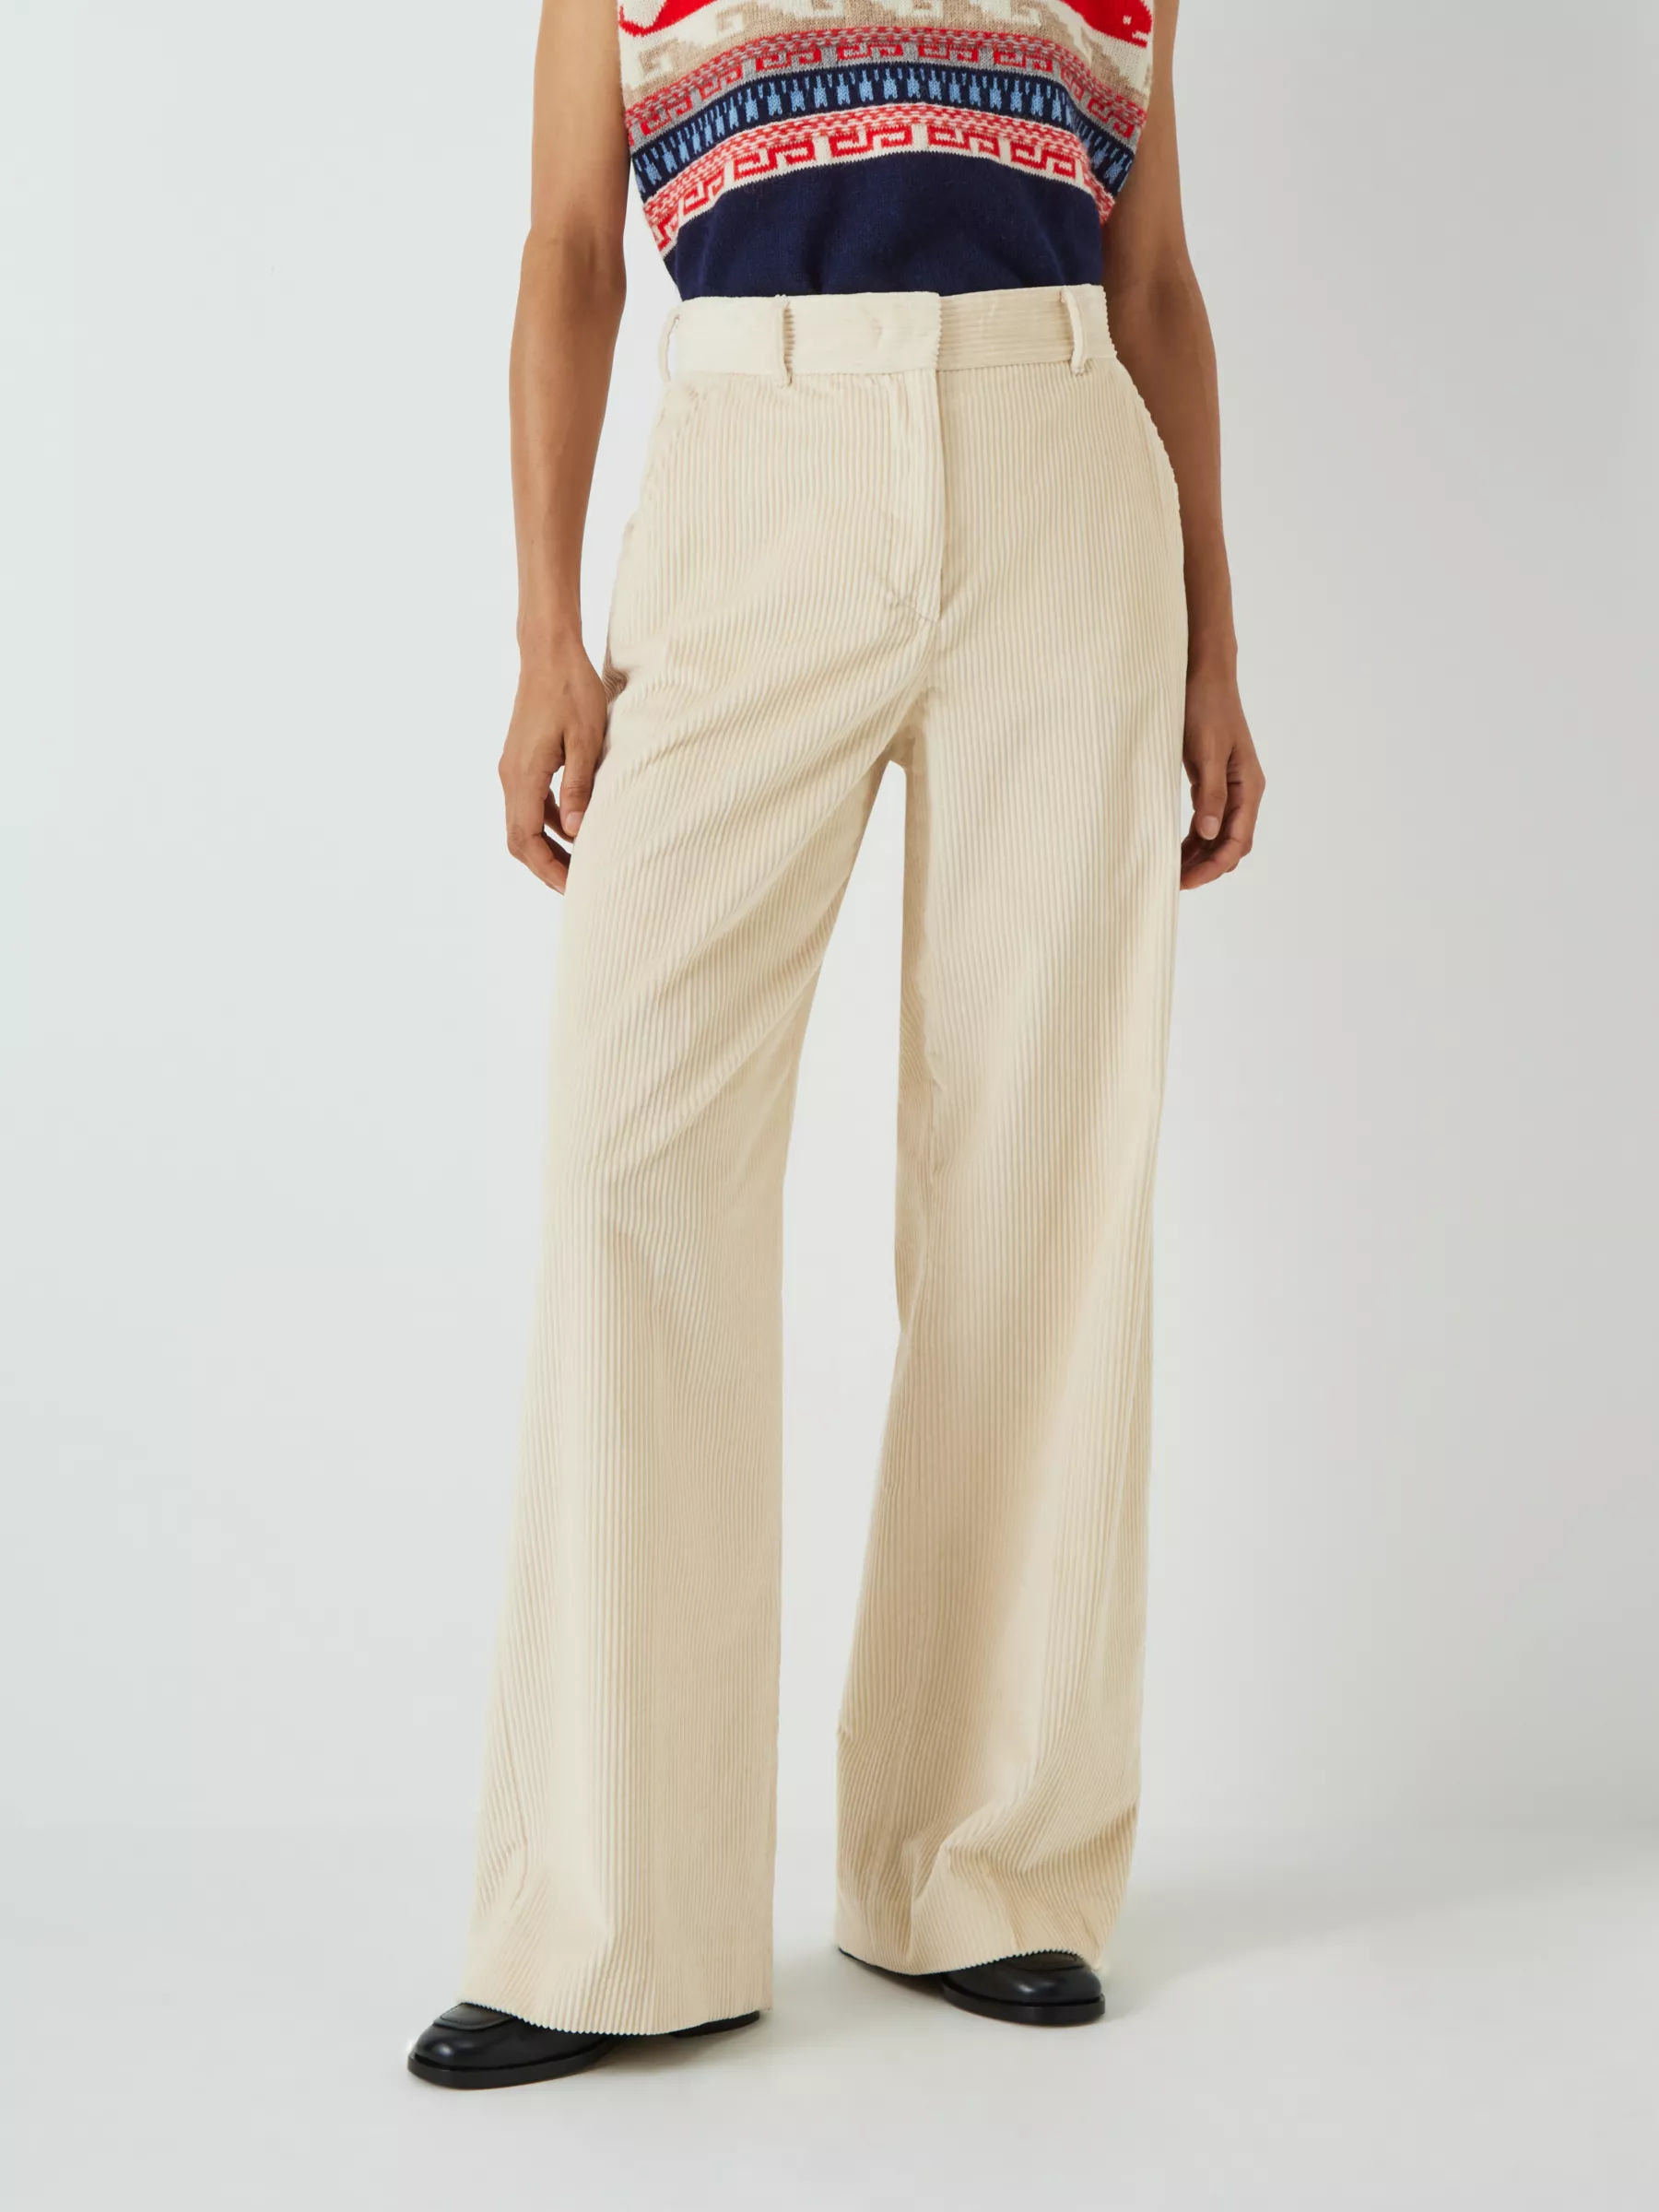 Wide corduroy trousers - Cream - Ladies | H&M